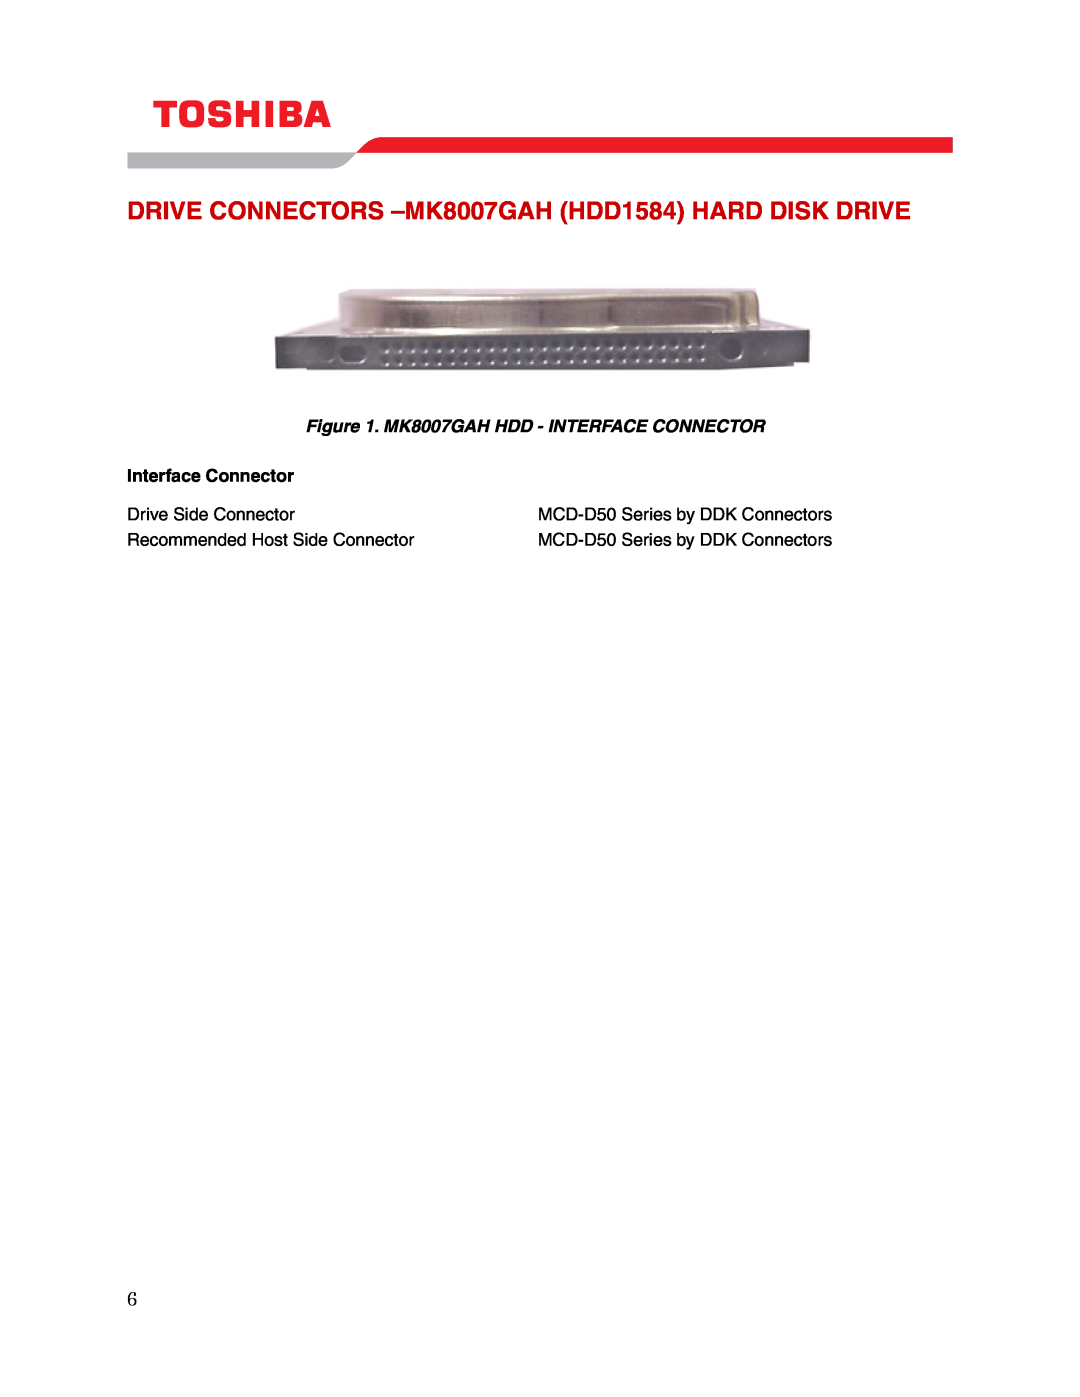 Toshiba DRIVE CONNECTORS -MK8007GAH HDD1584 HARD DISK DRIVE, MK8007GAH HDD - INTERFACE CONNECTOR, Interface Connector 